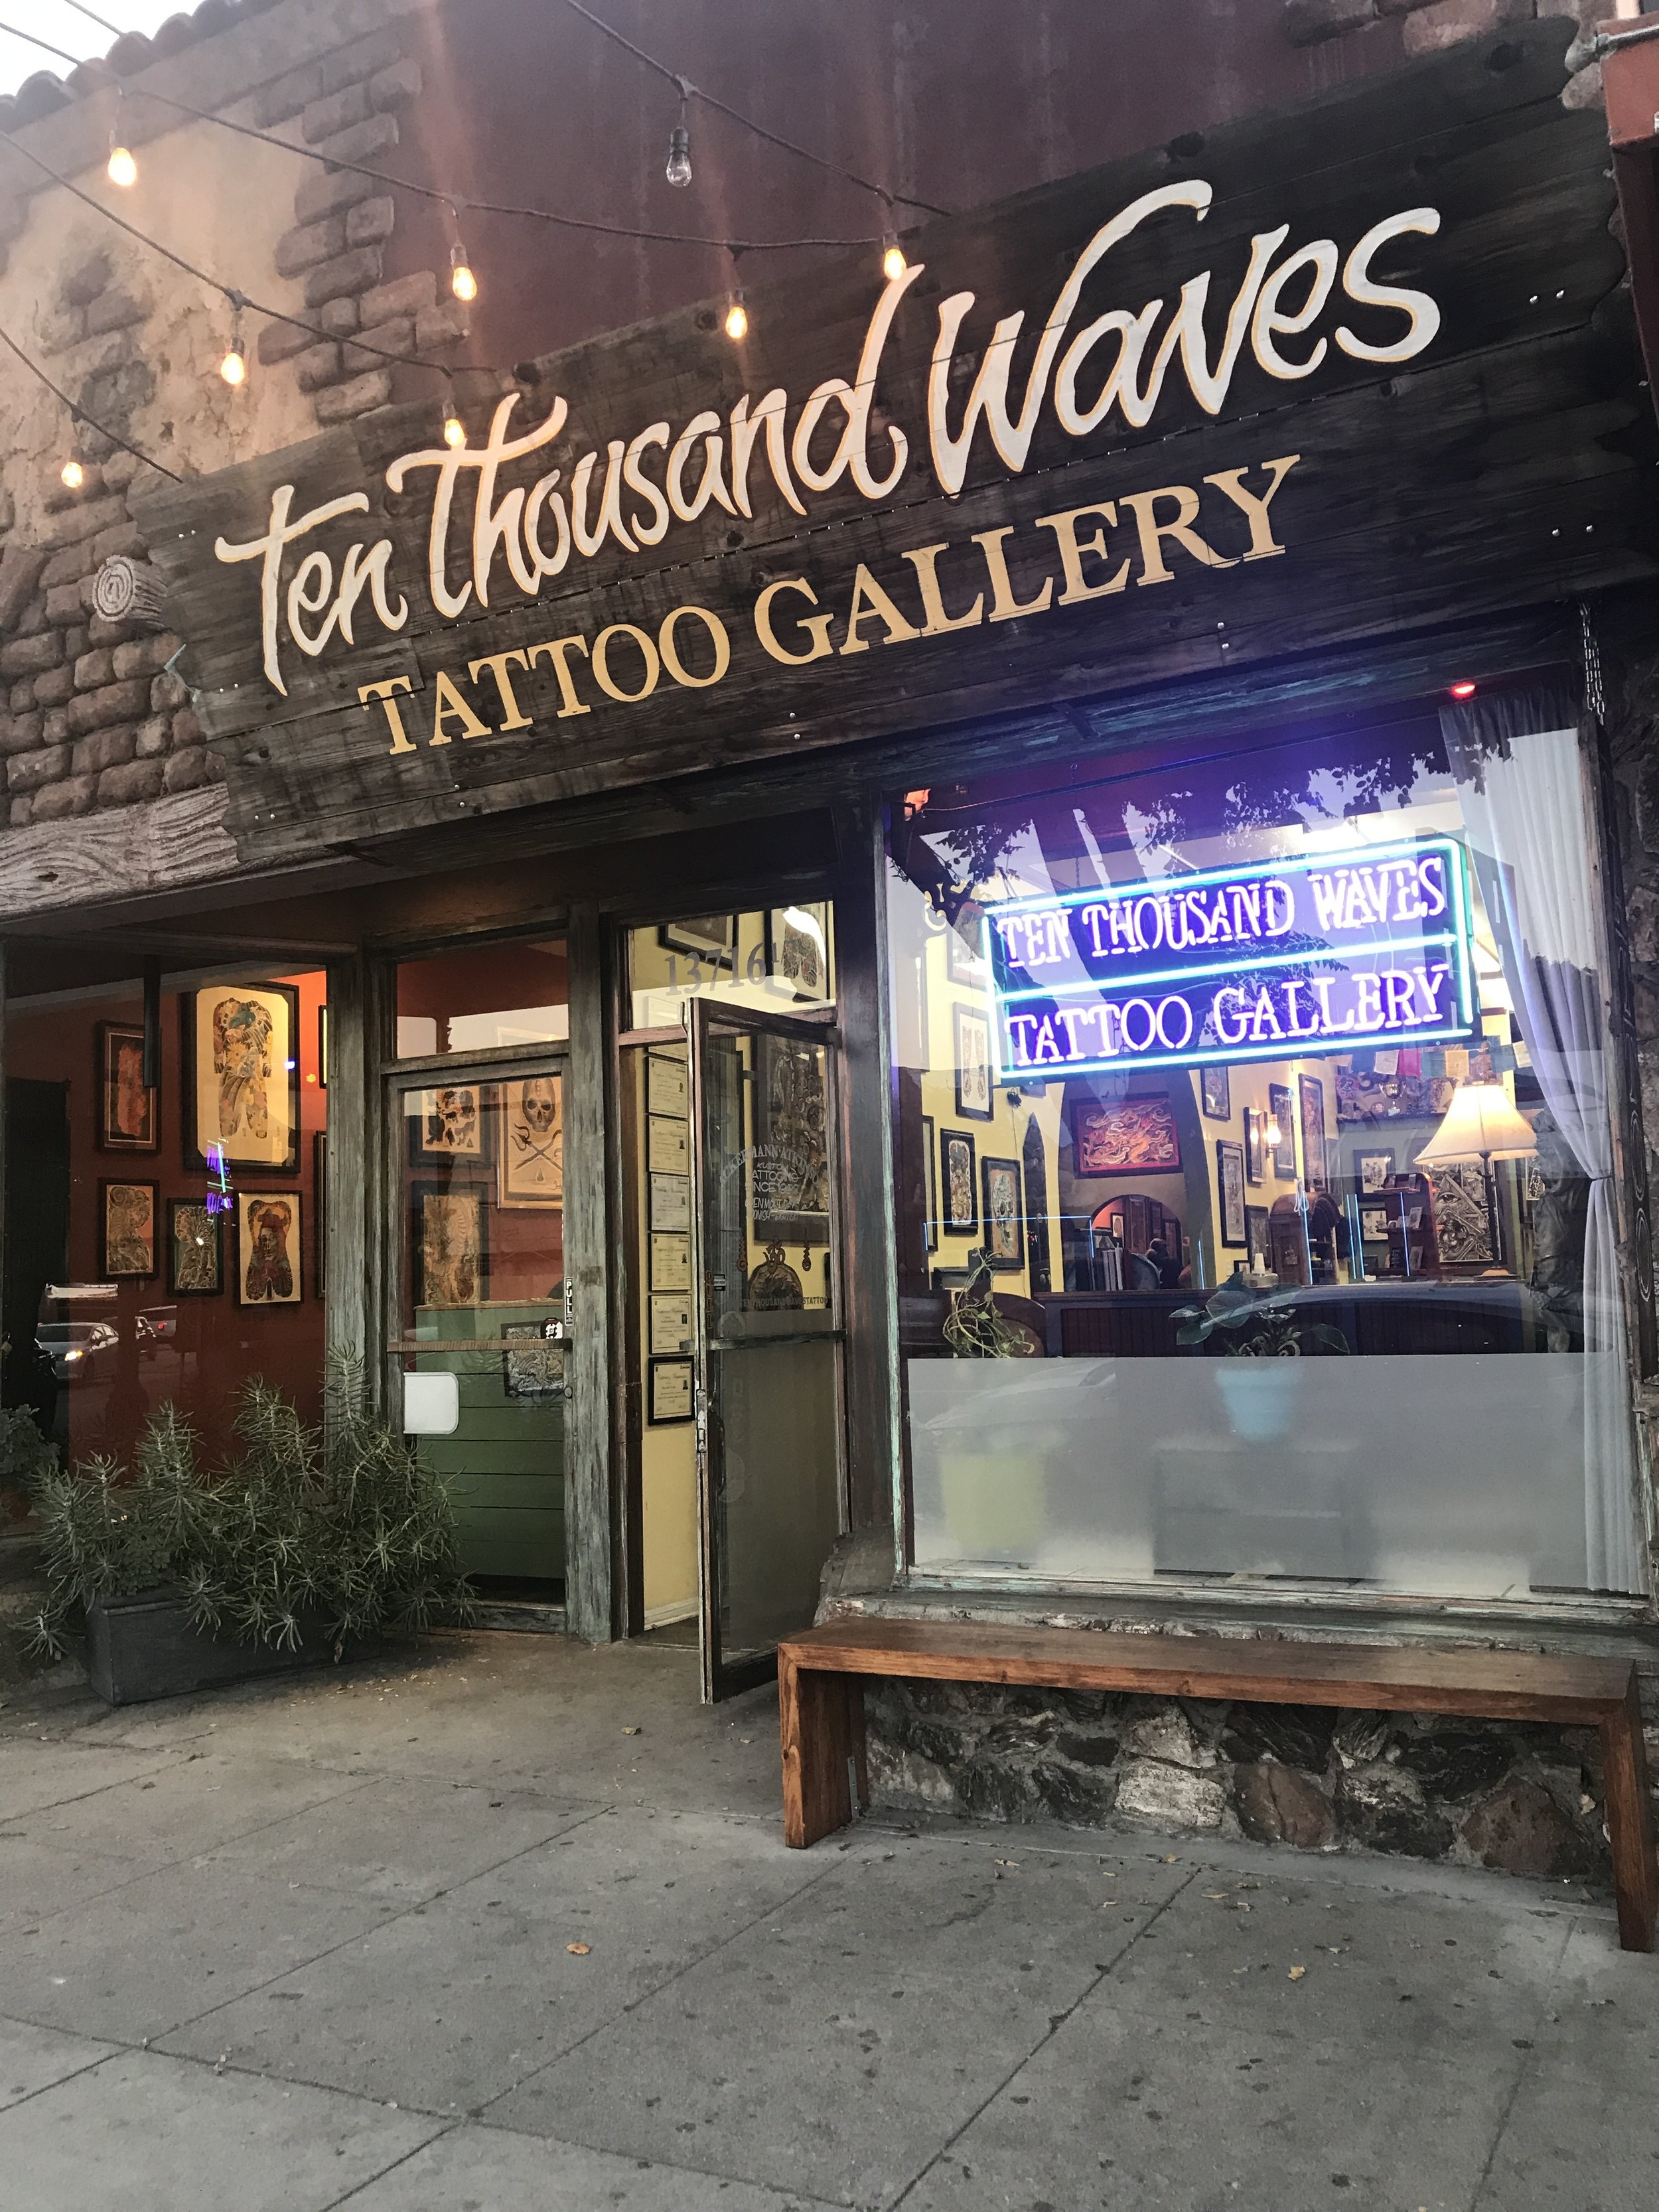 Ten thousand waves tattoo gallery